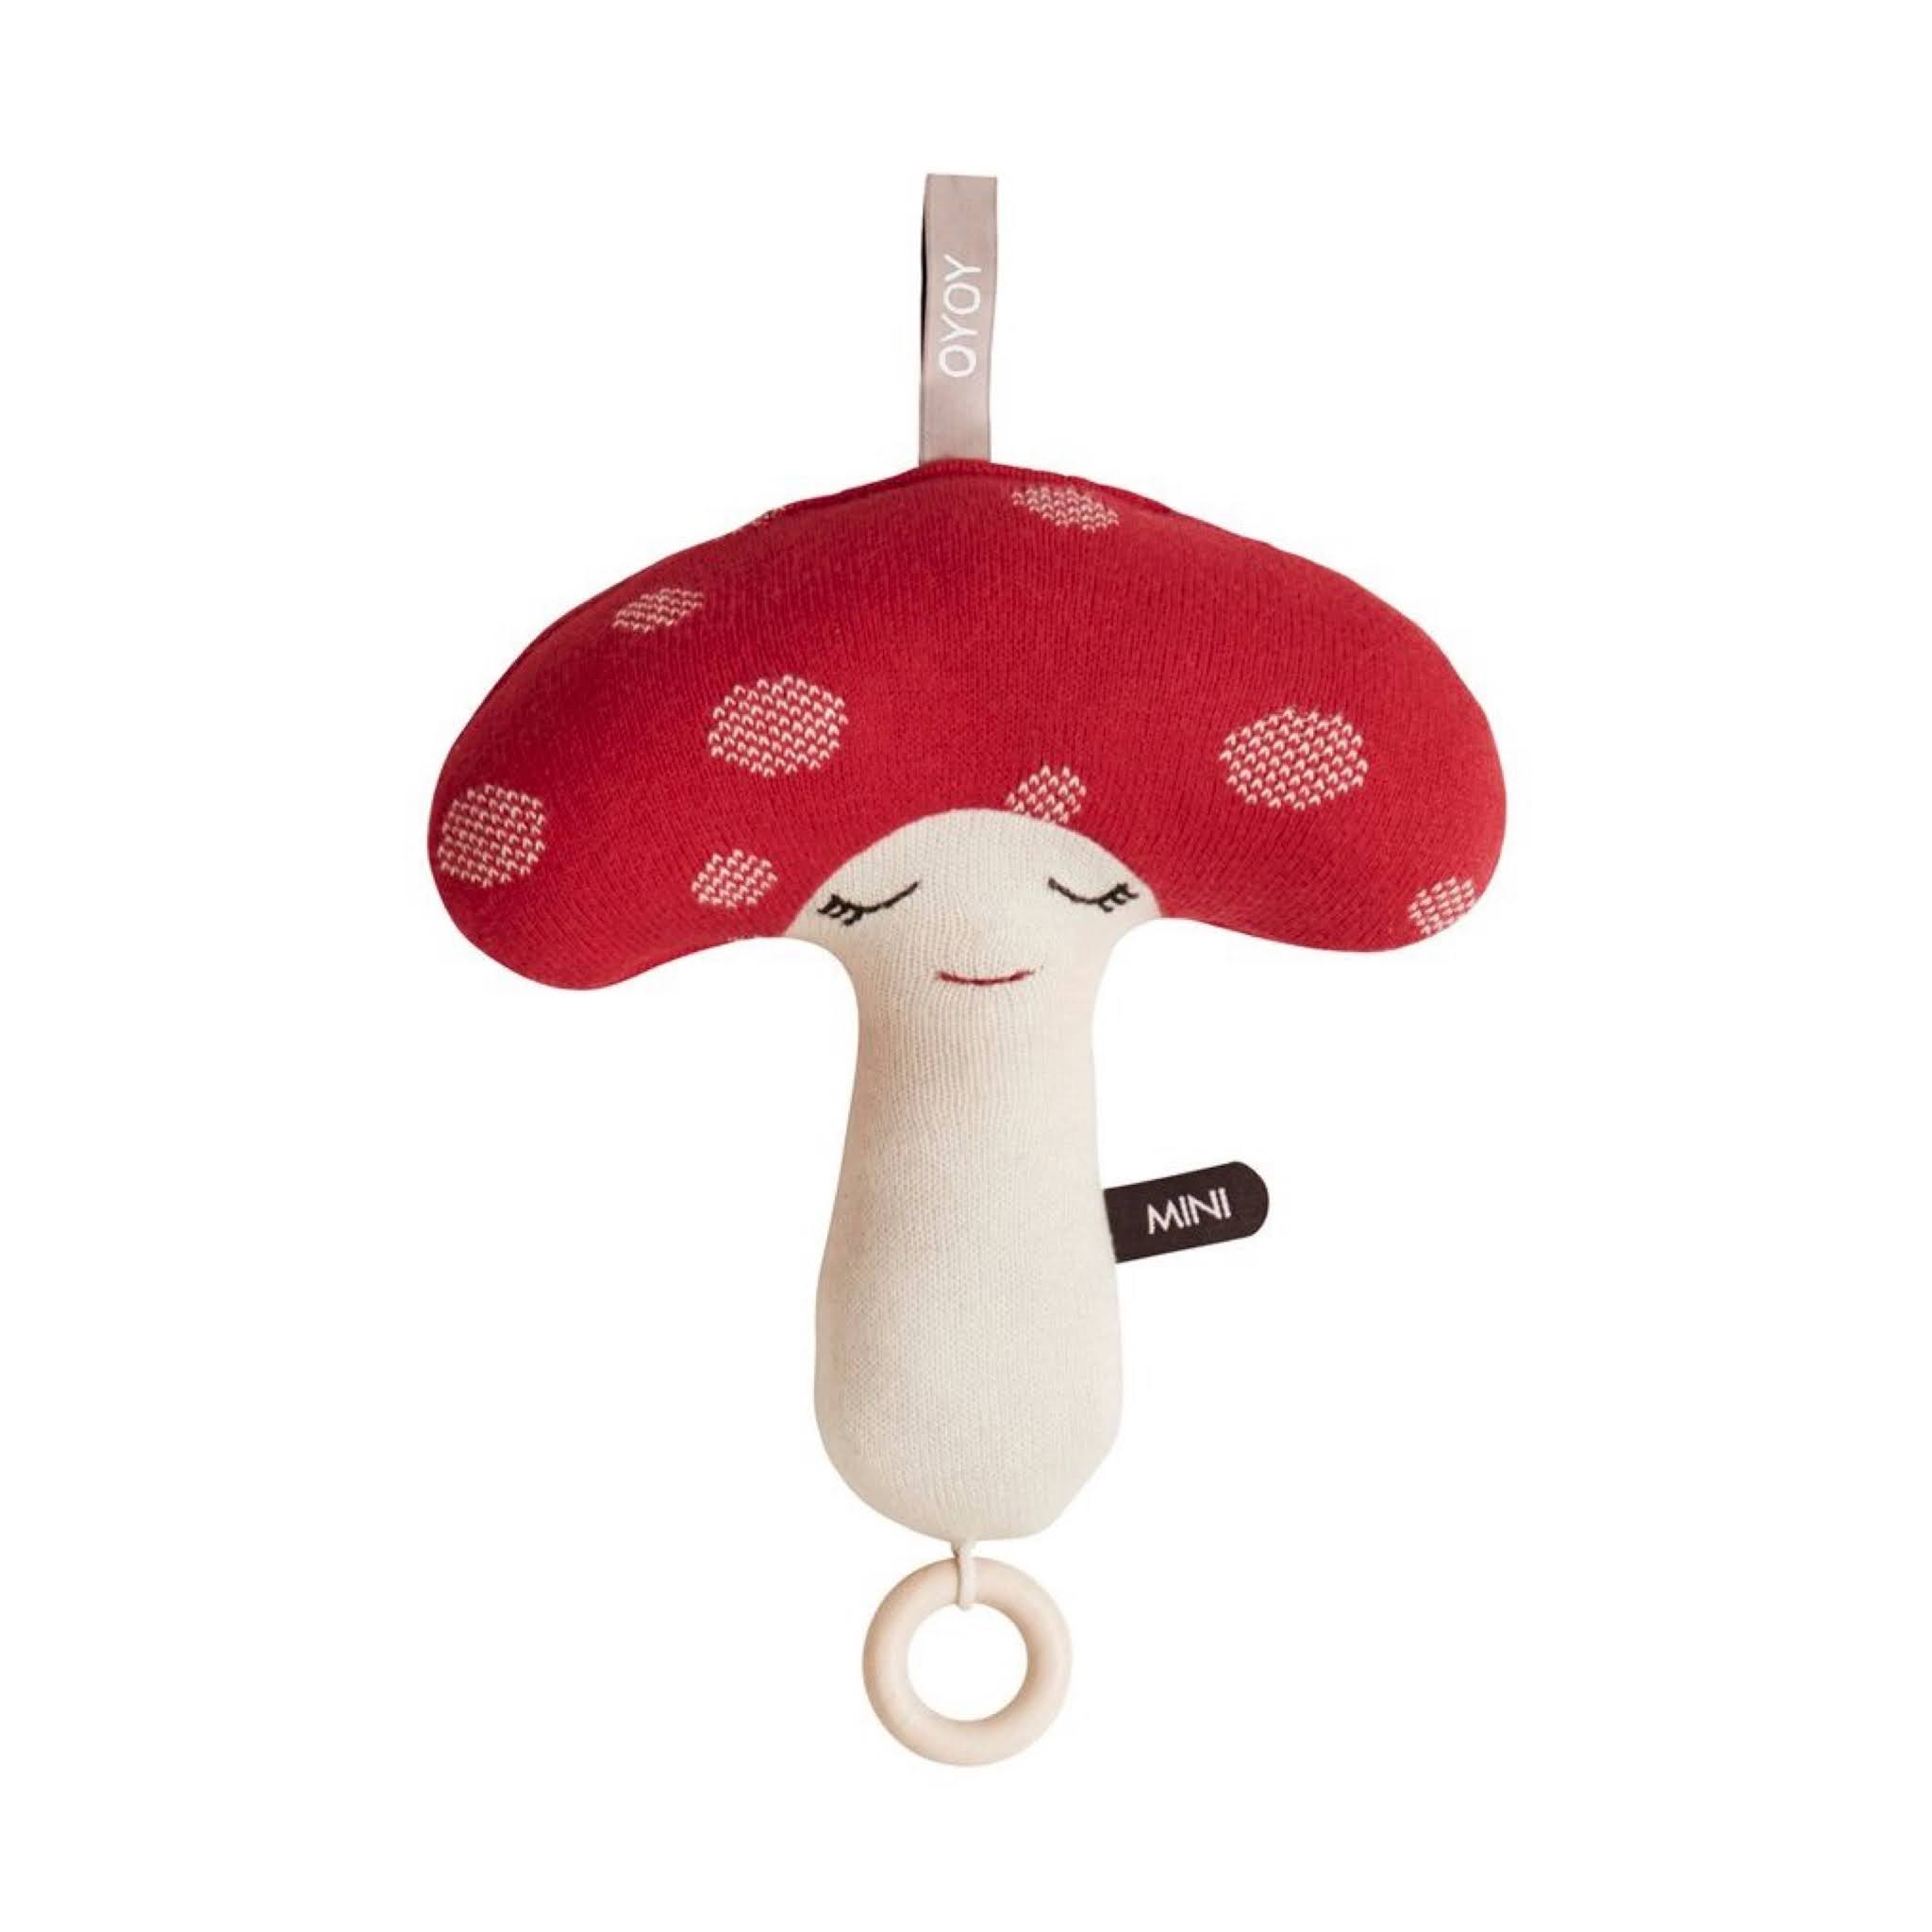 Baby Mushroom Music Toy from OYOY